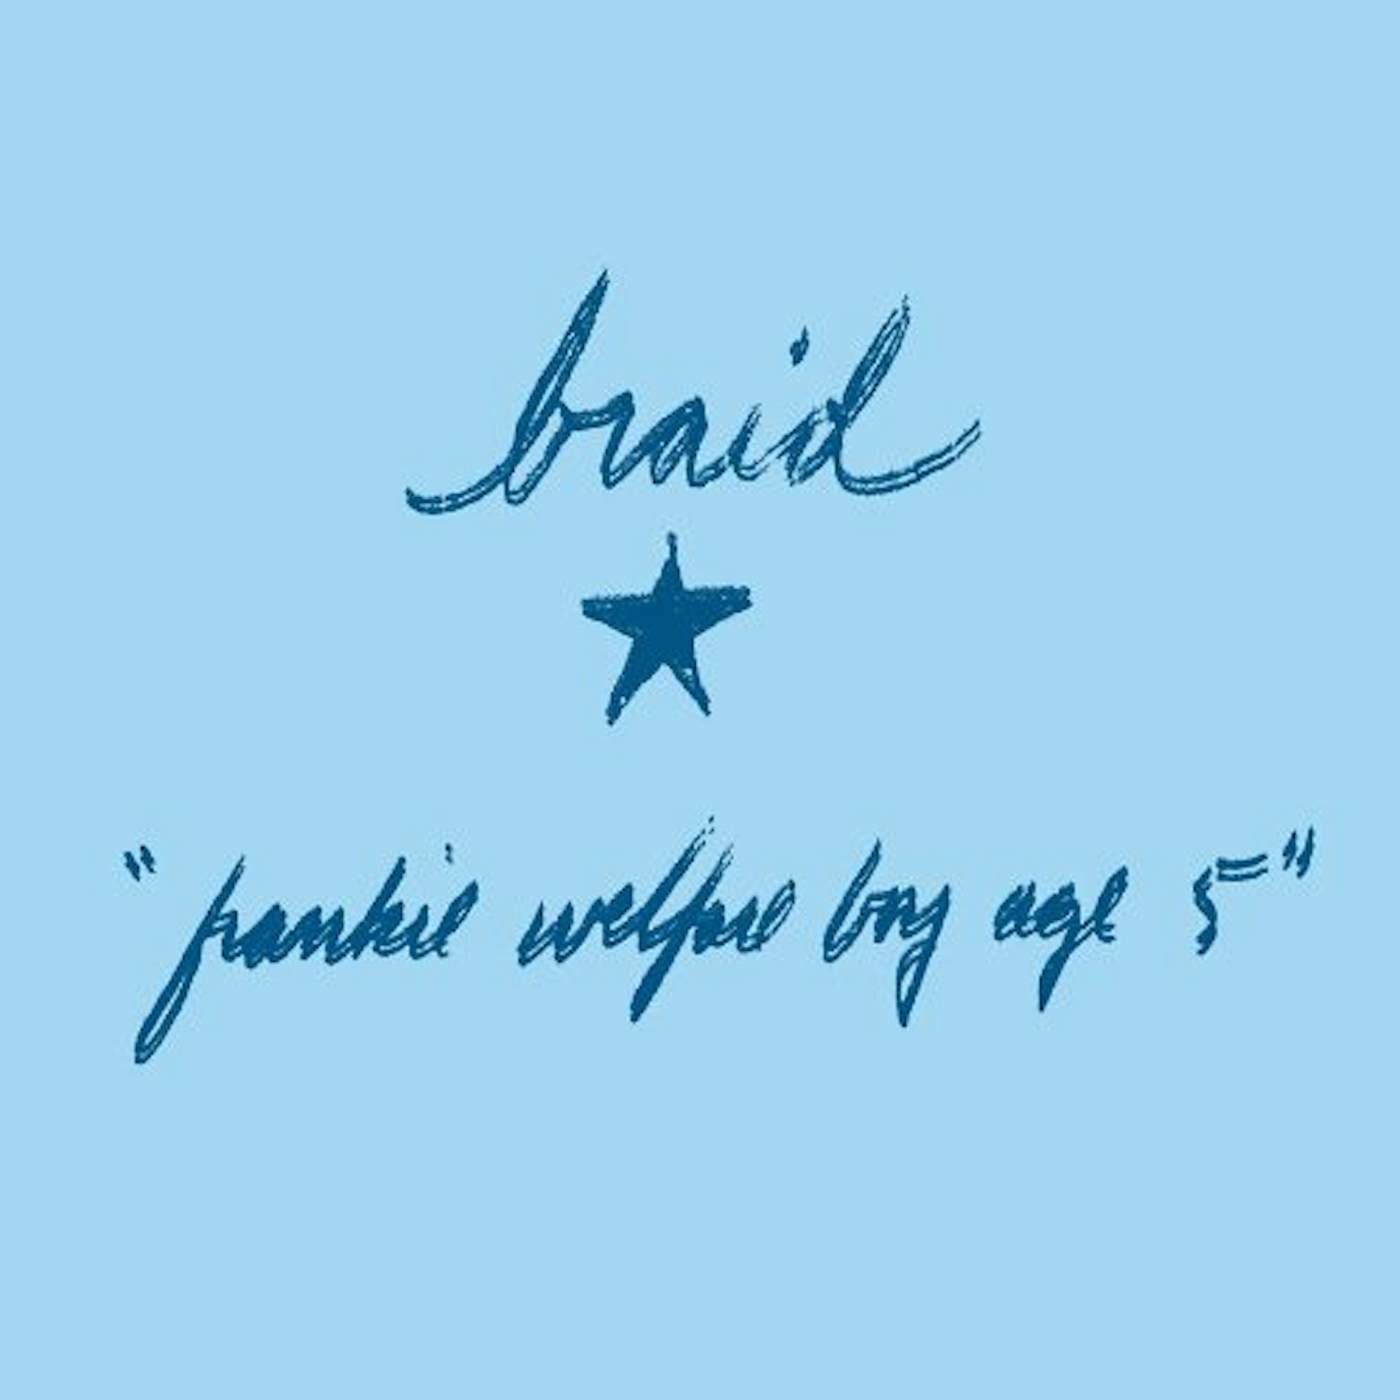 Braid Frankie Welfare Boy Age Five Vinyl Record